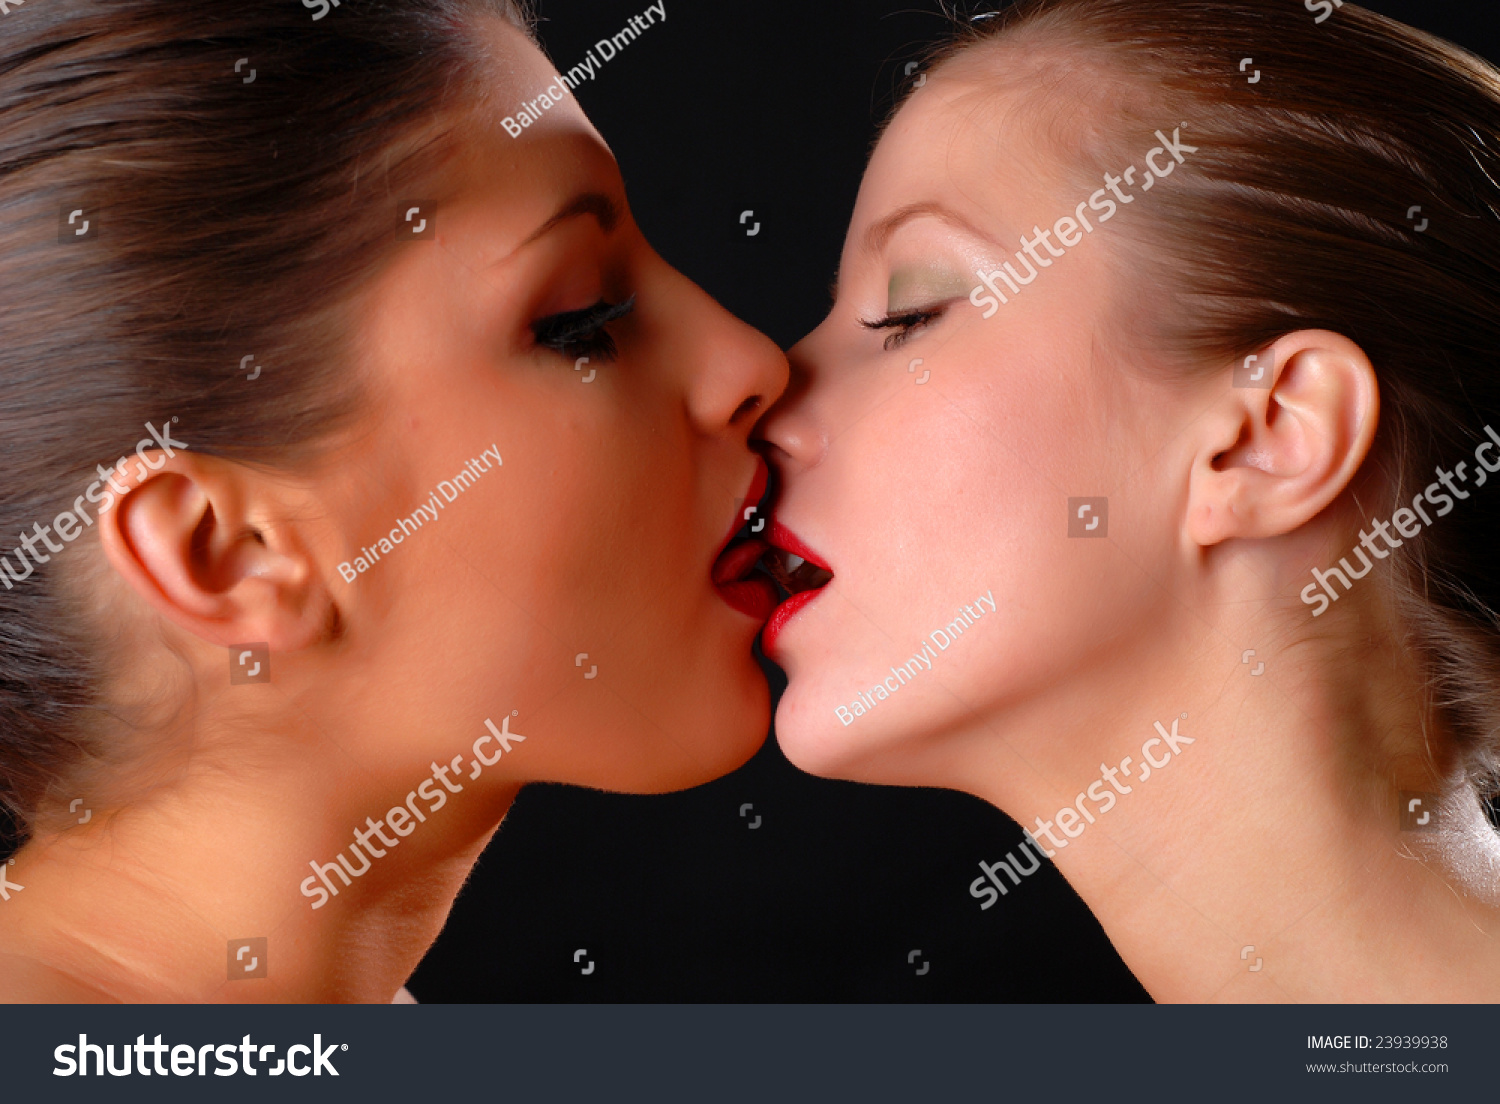 Women black black women kissing Category:Females kissing